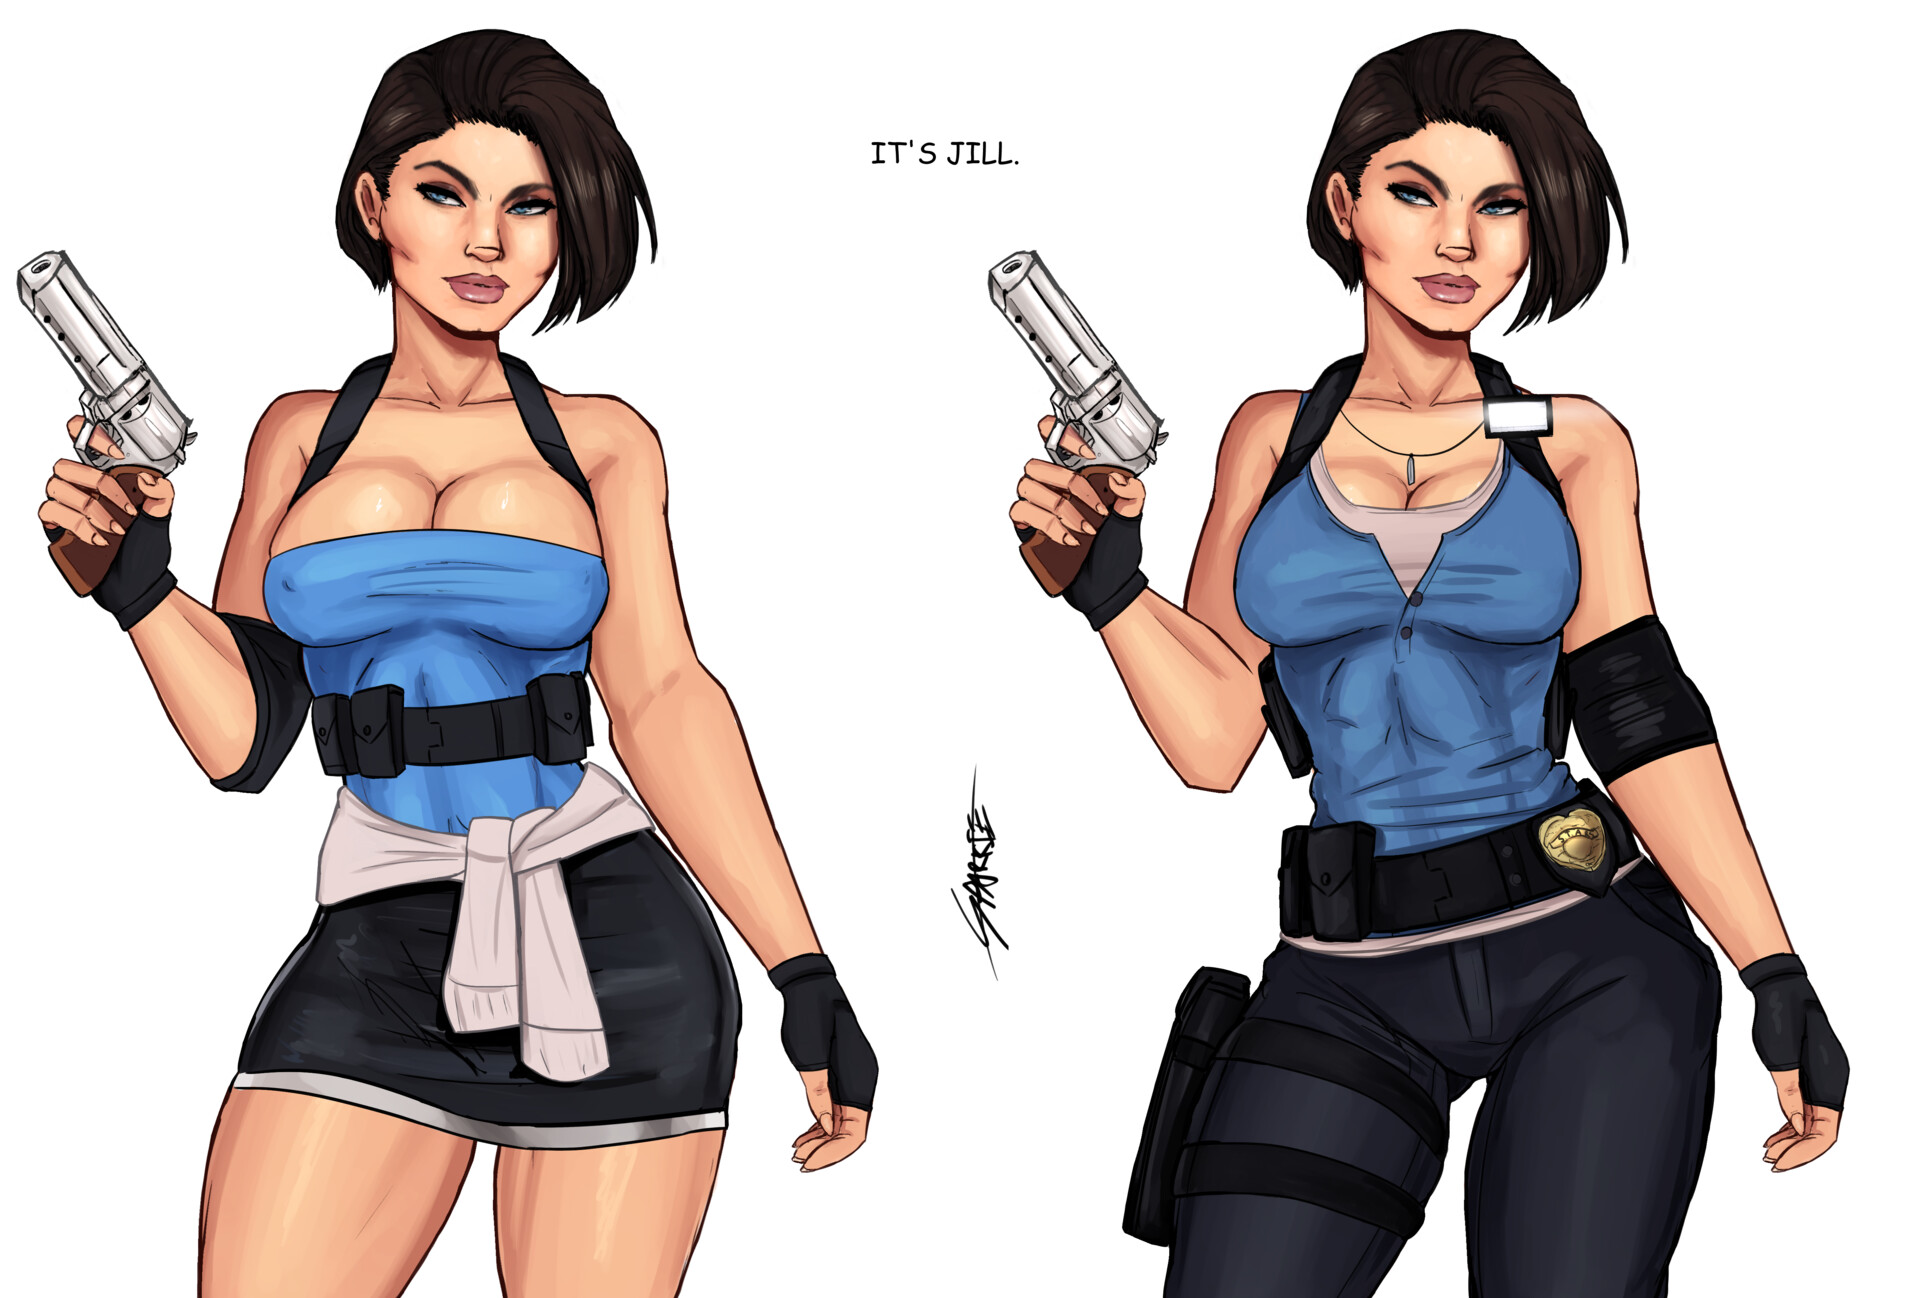 ArtStation - Resident Evil 3 - Jill Valentine Fan Art